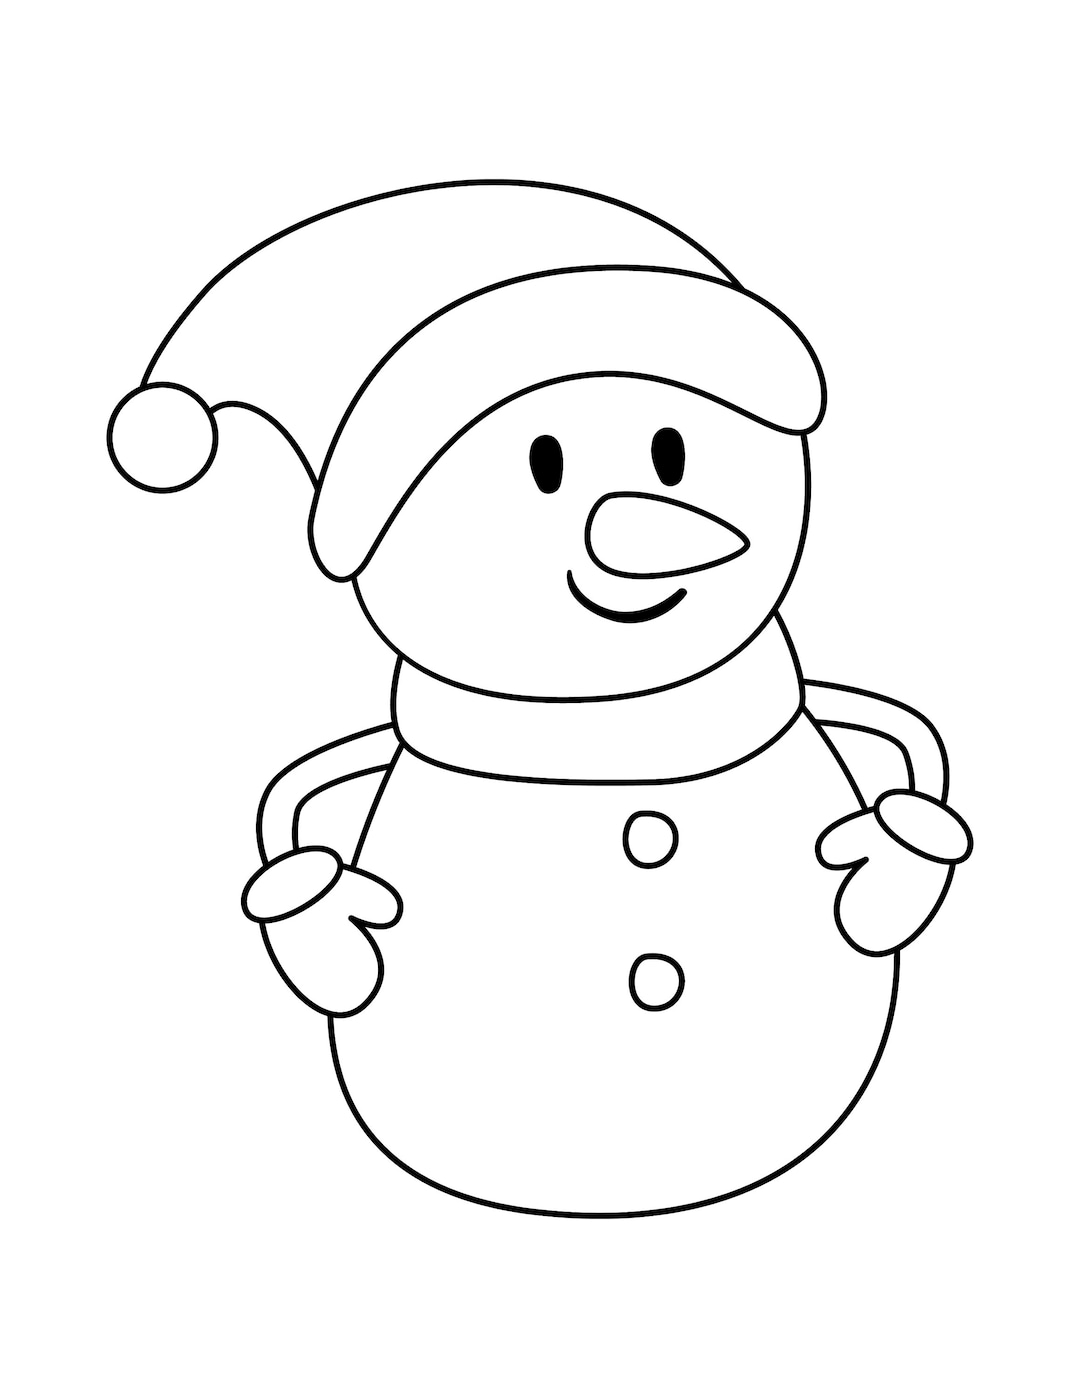 Kids christmas coloring pages santa snowman reindeer elves and gingerbread man